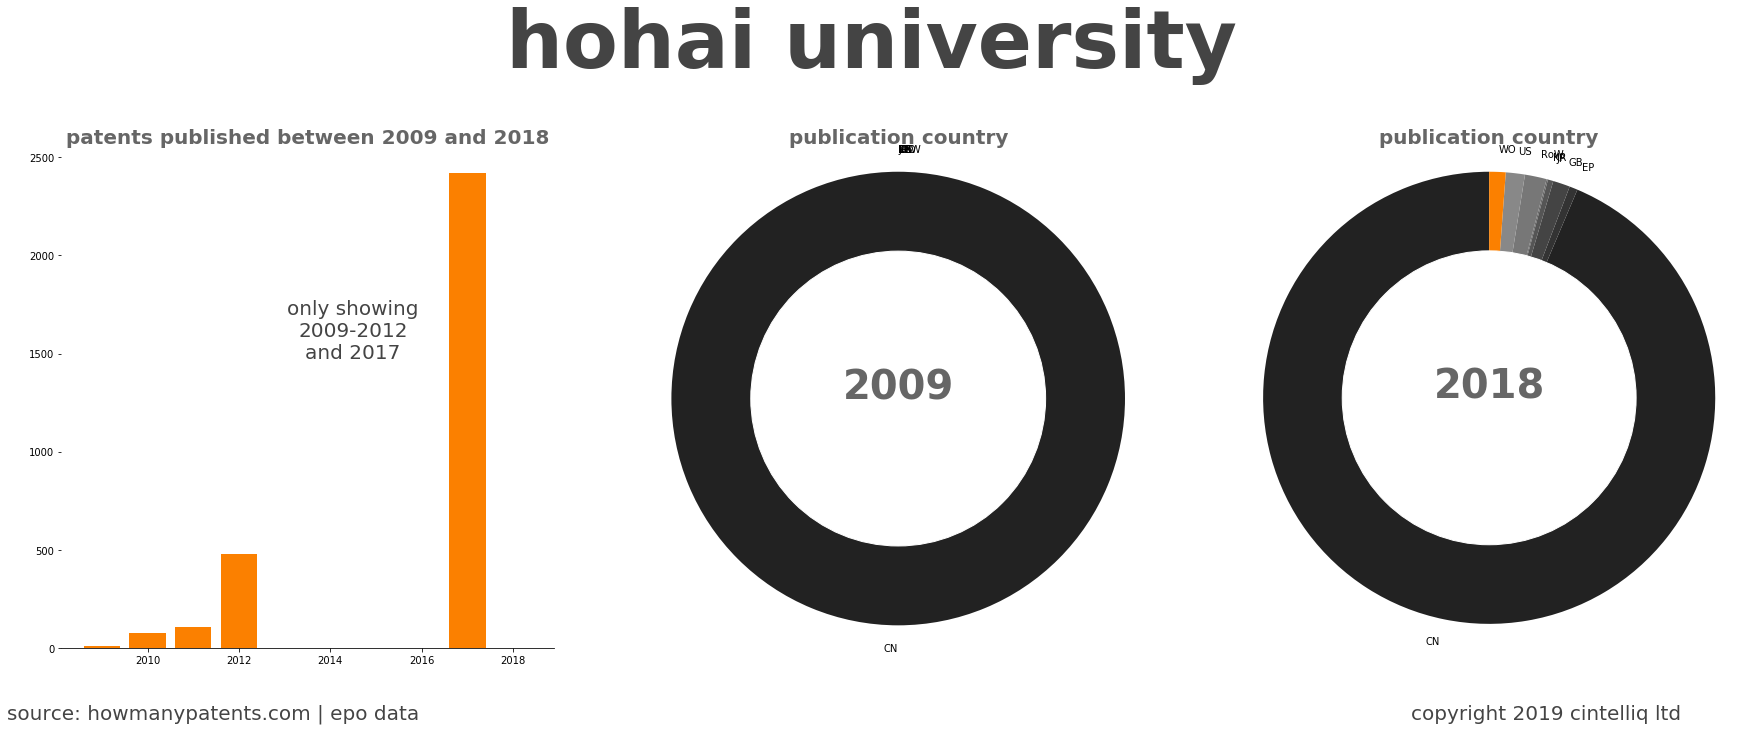 summary of patents for Hohai University